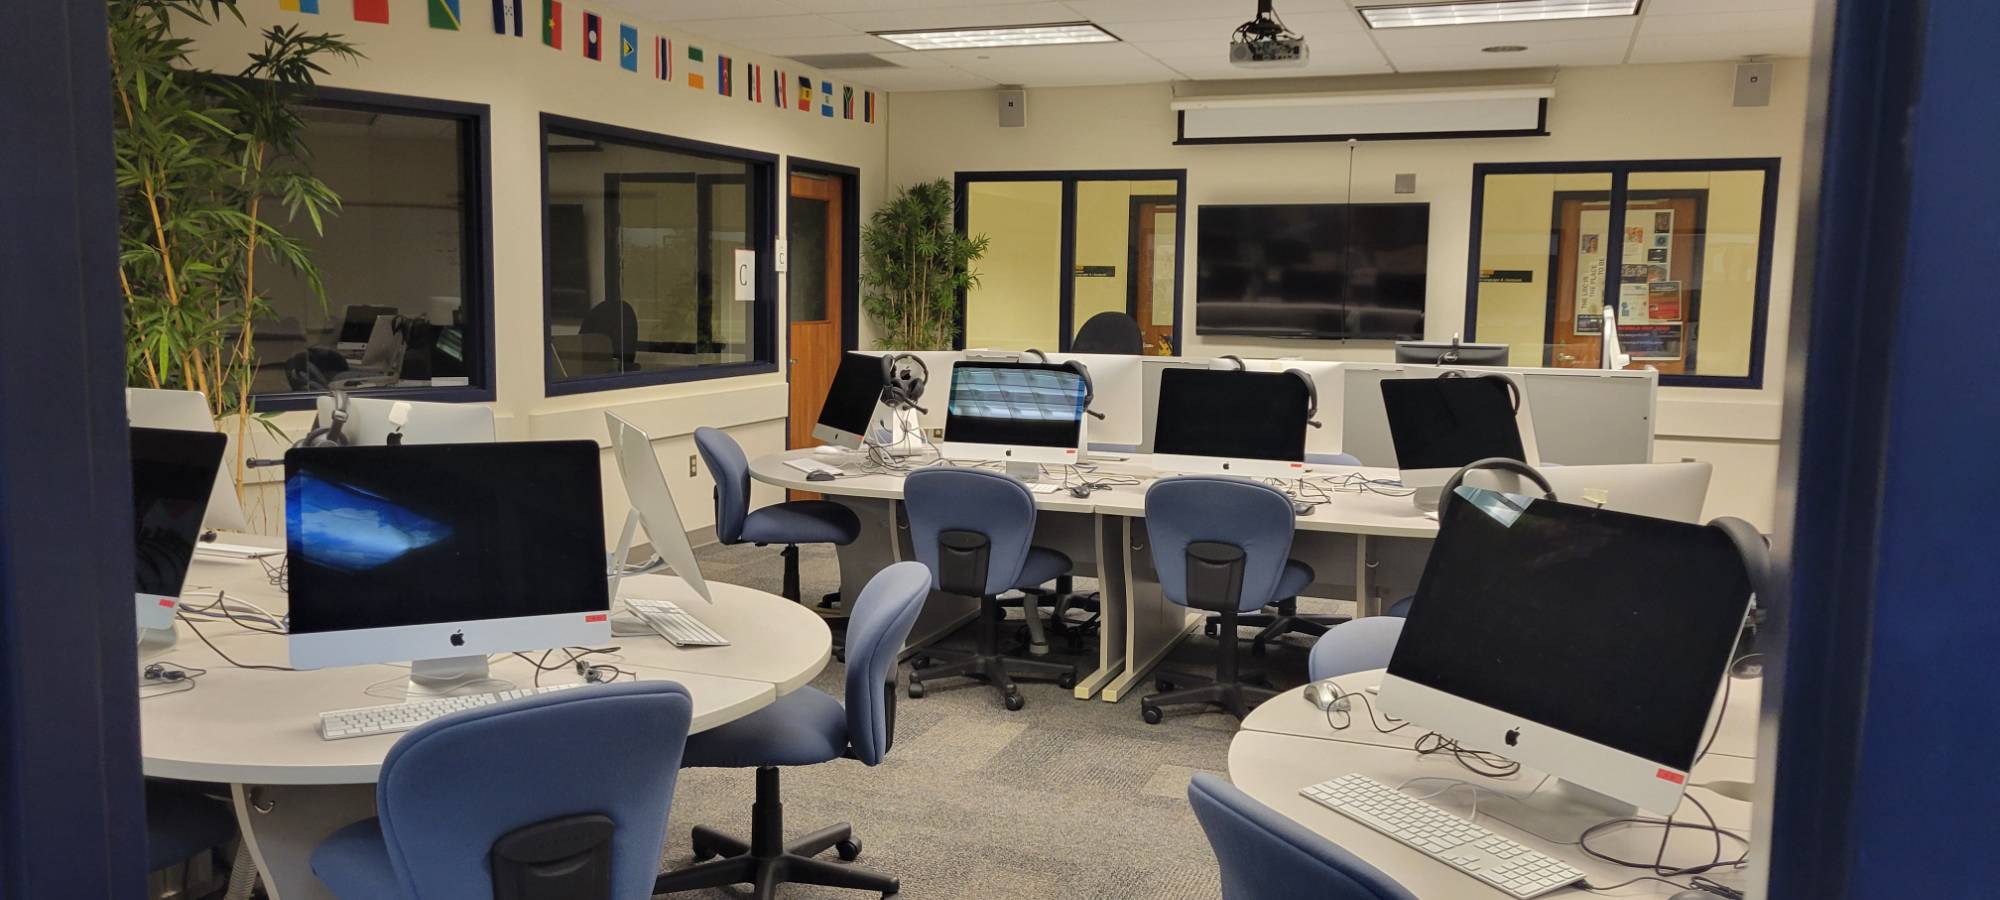 lrc computer lab